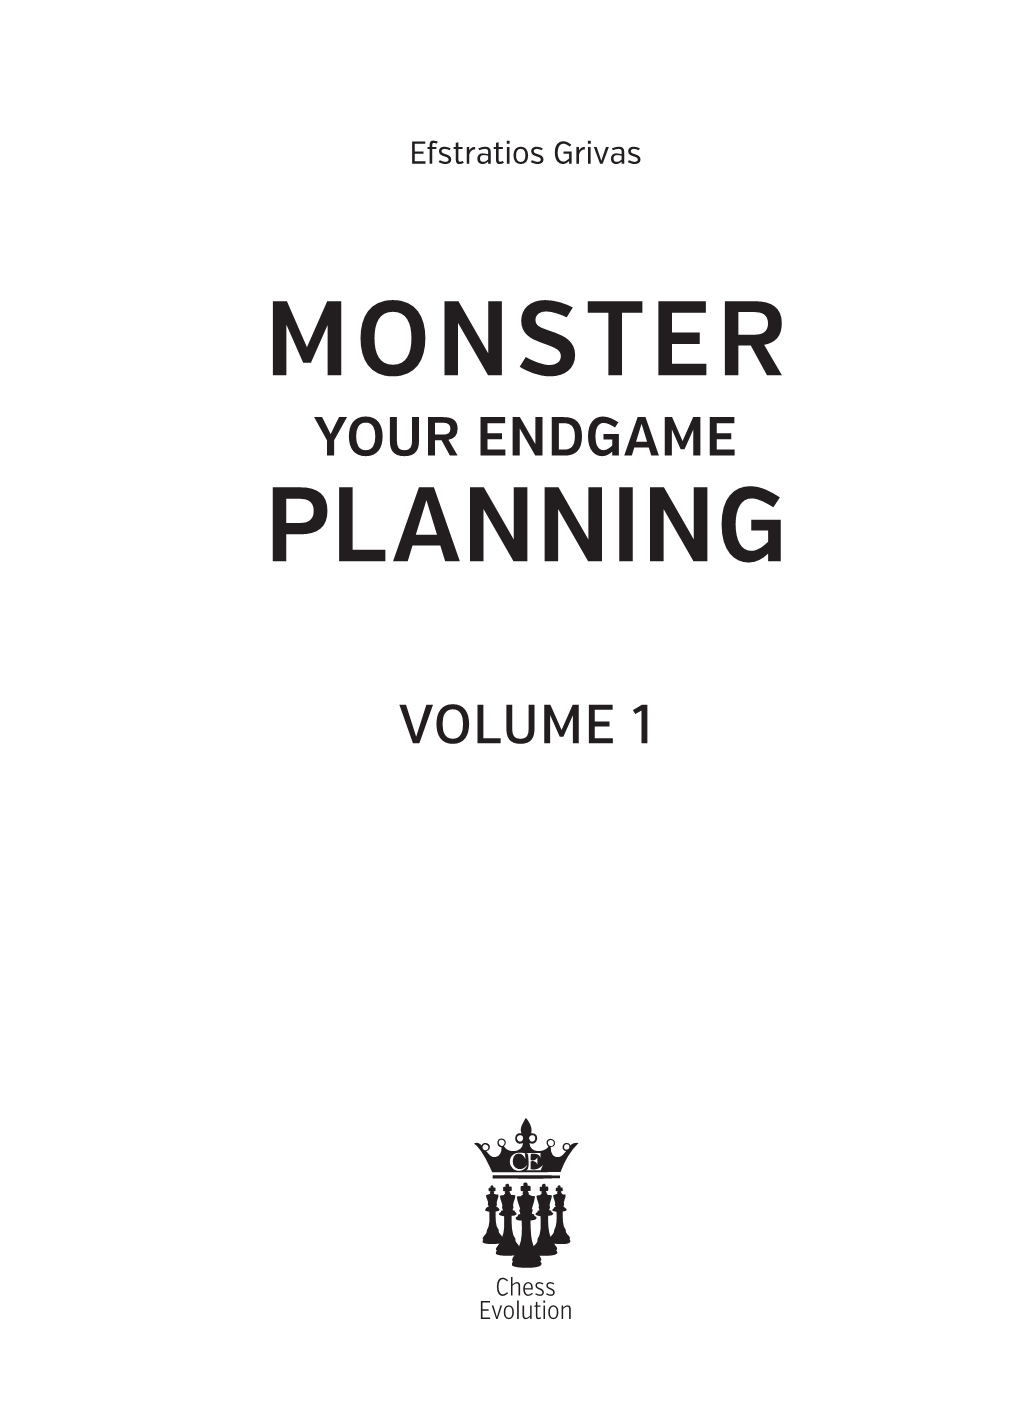 Monster Your Endgame Planning